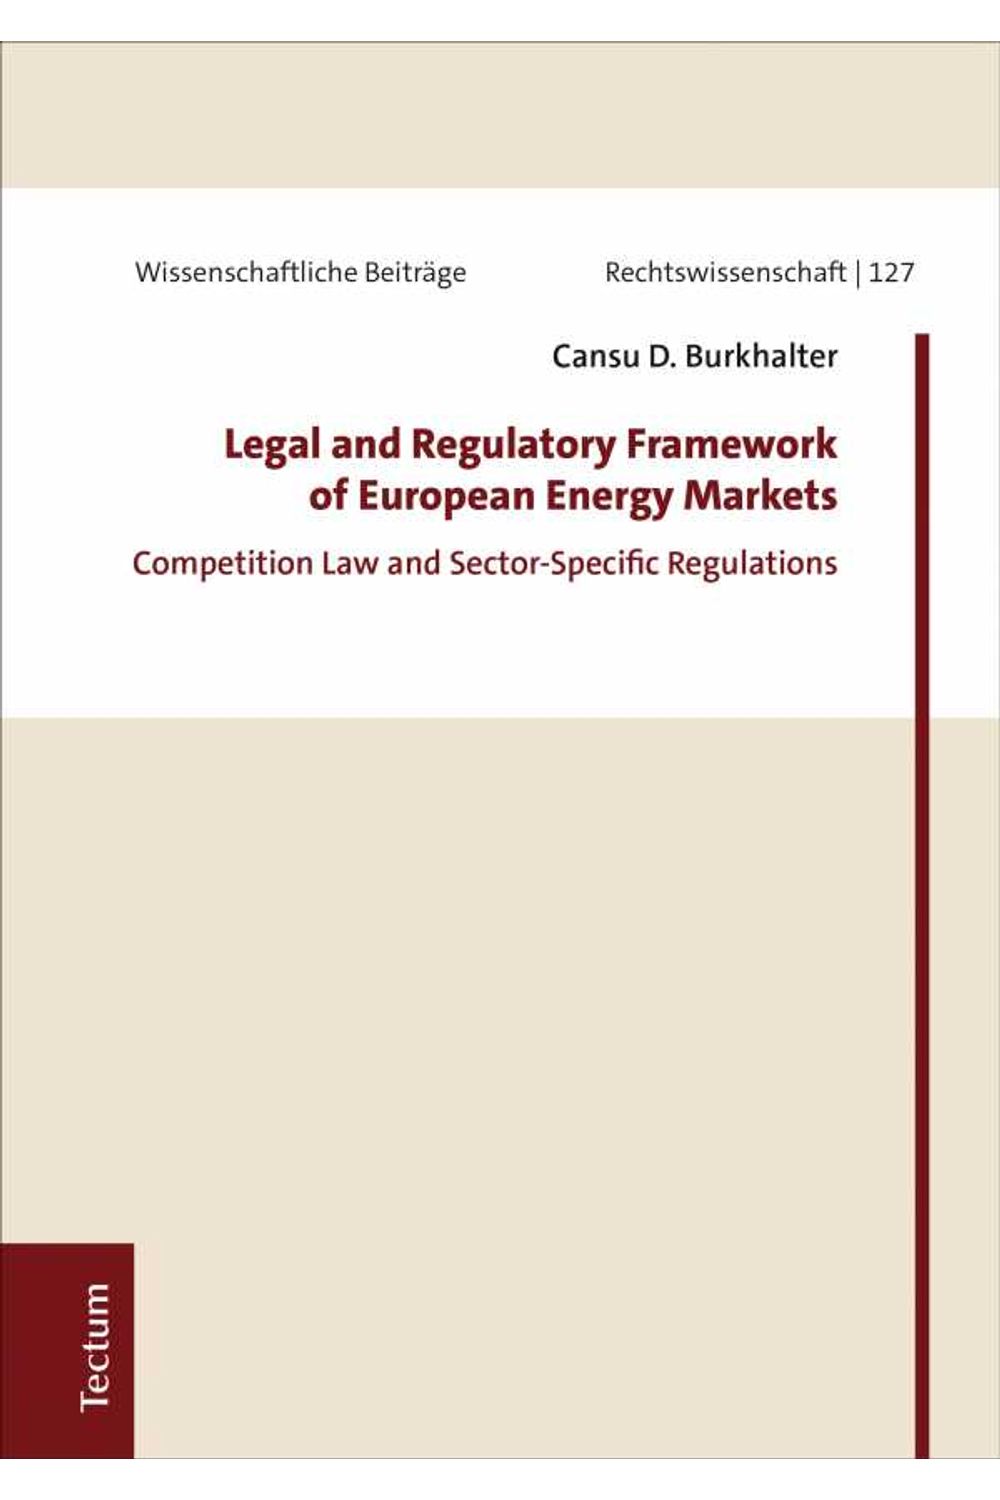 bw-legal-and-regulatory-framework-of-european-energy-markets-tectum-wissenschaftsverlag-9783828874404